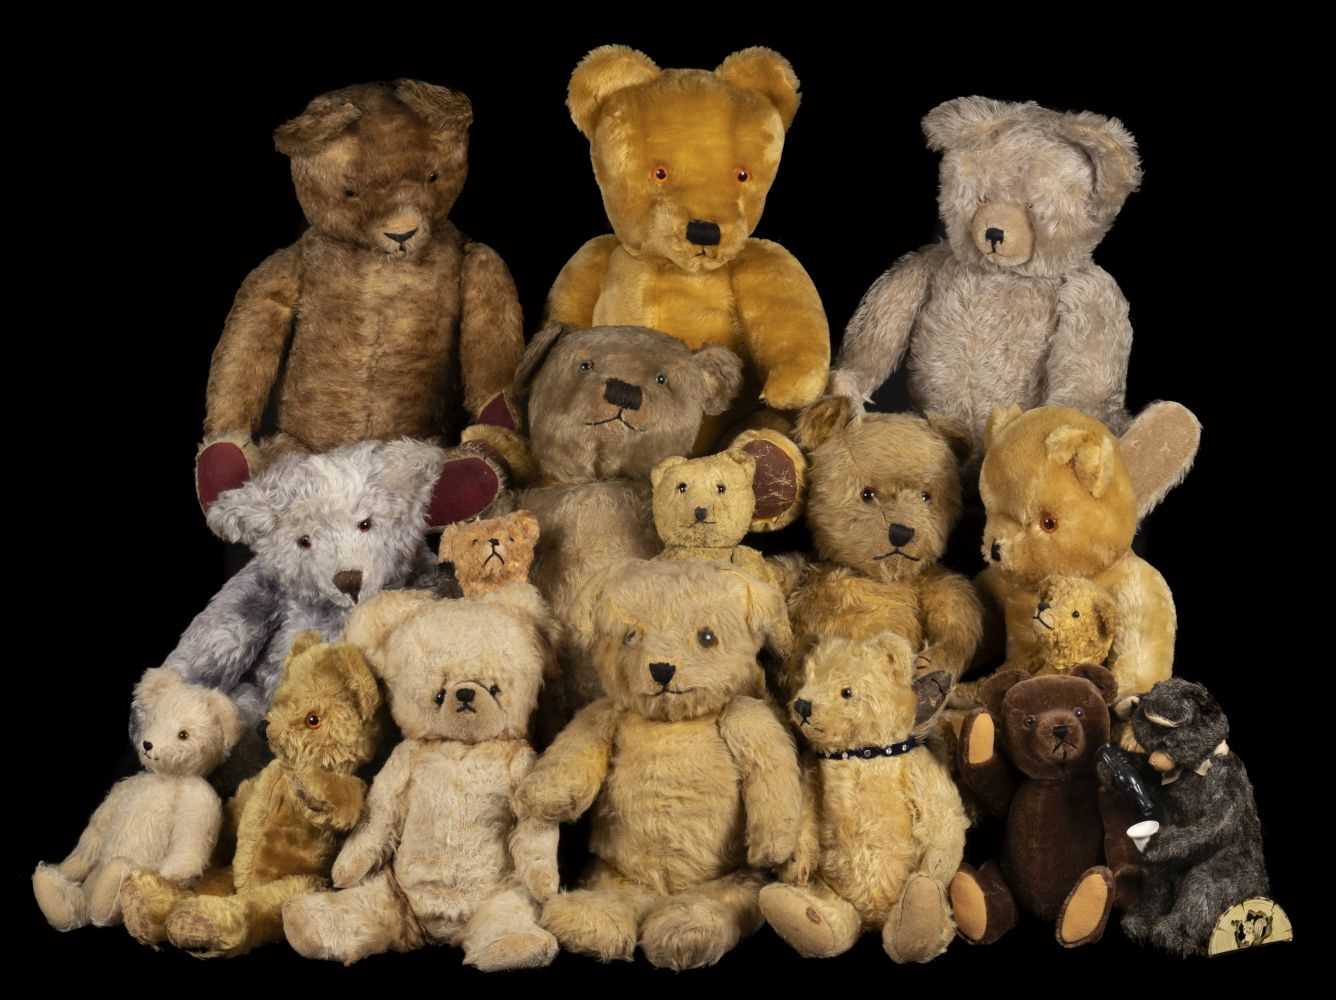 Lot 489 - Teddy Bears. An early teddy bear, probably British, 1930s, & others